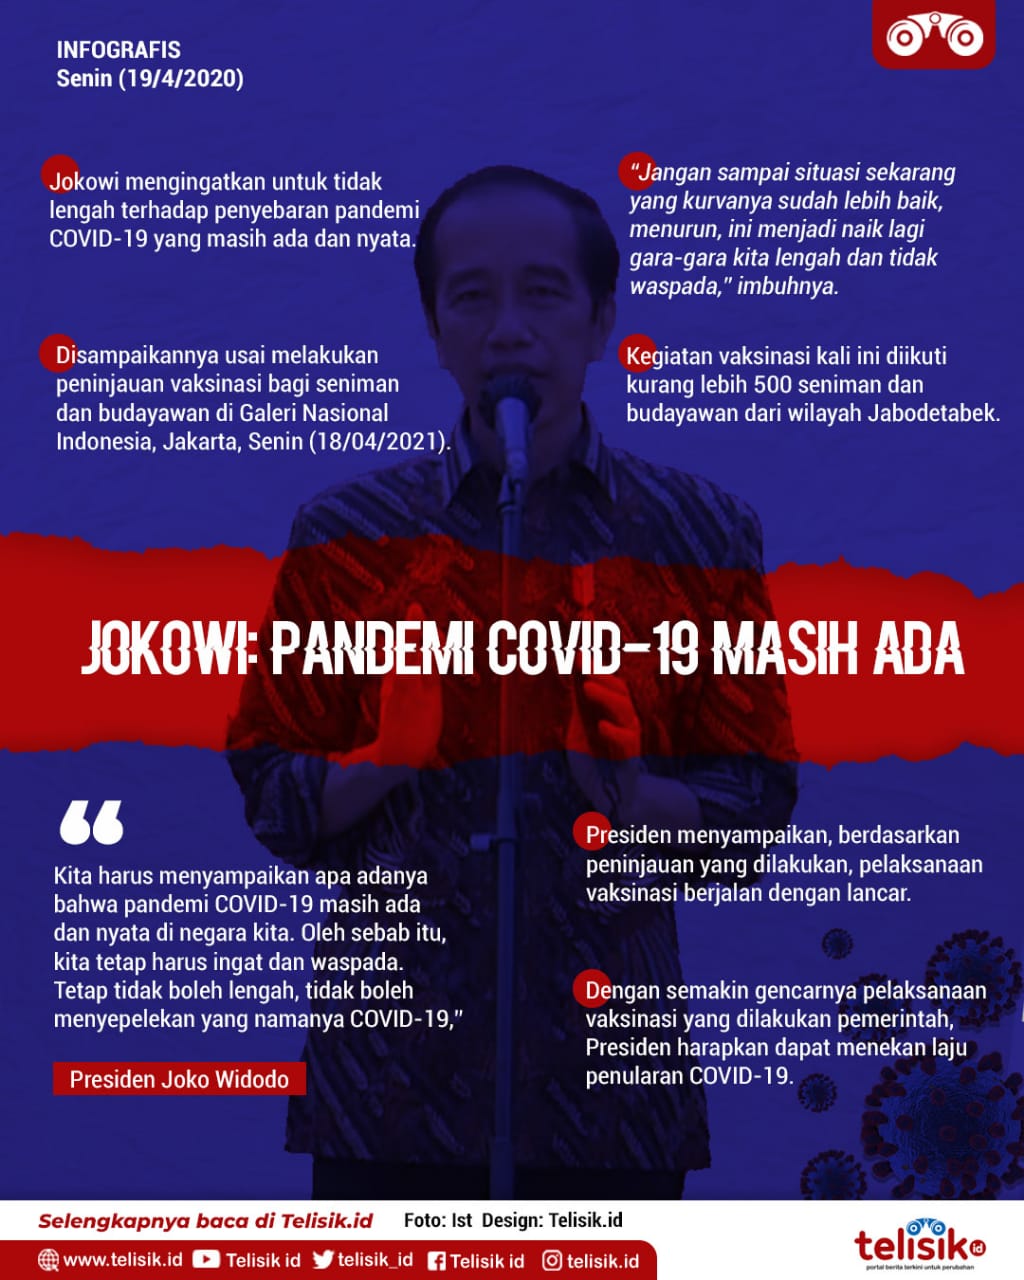 Infografis: Jokowi Sebut Pandemi COVID-19 Masih Ada